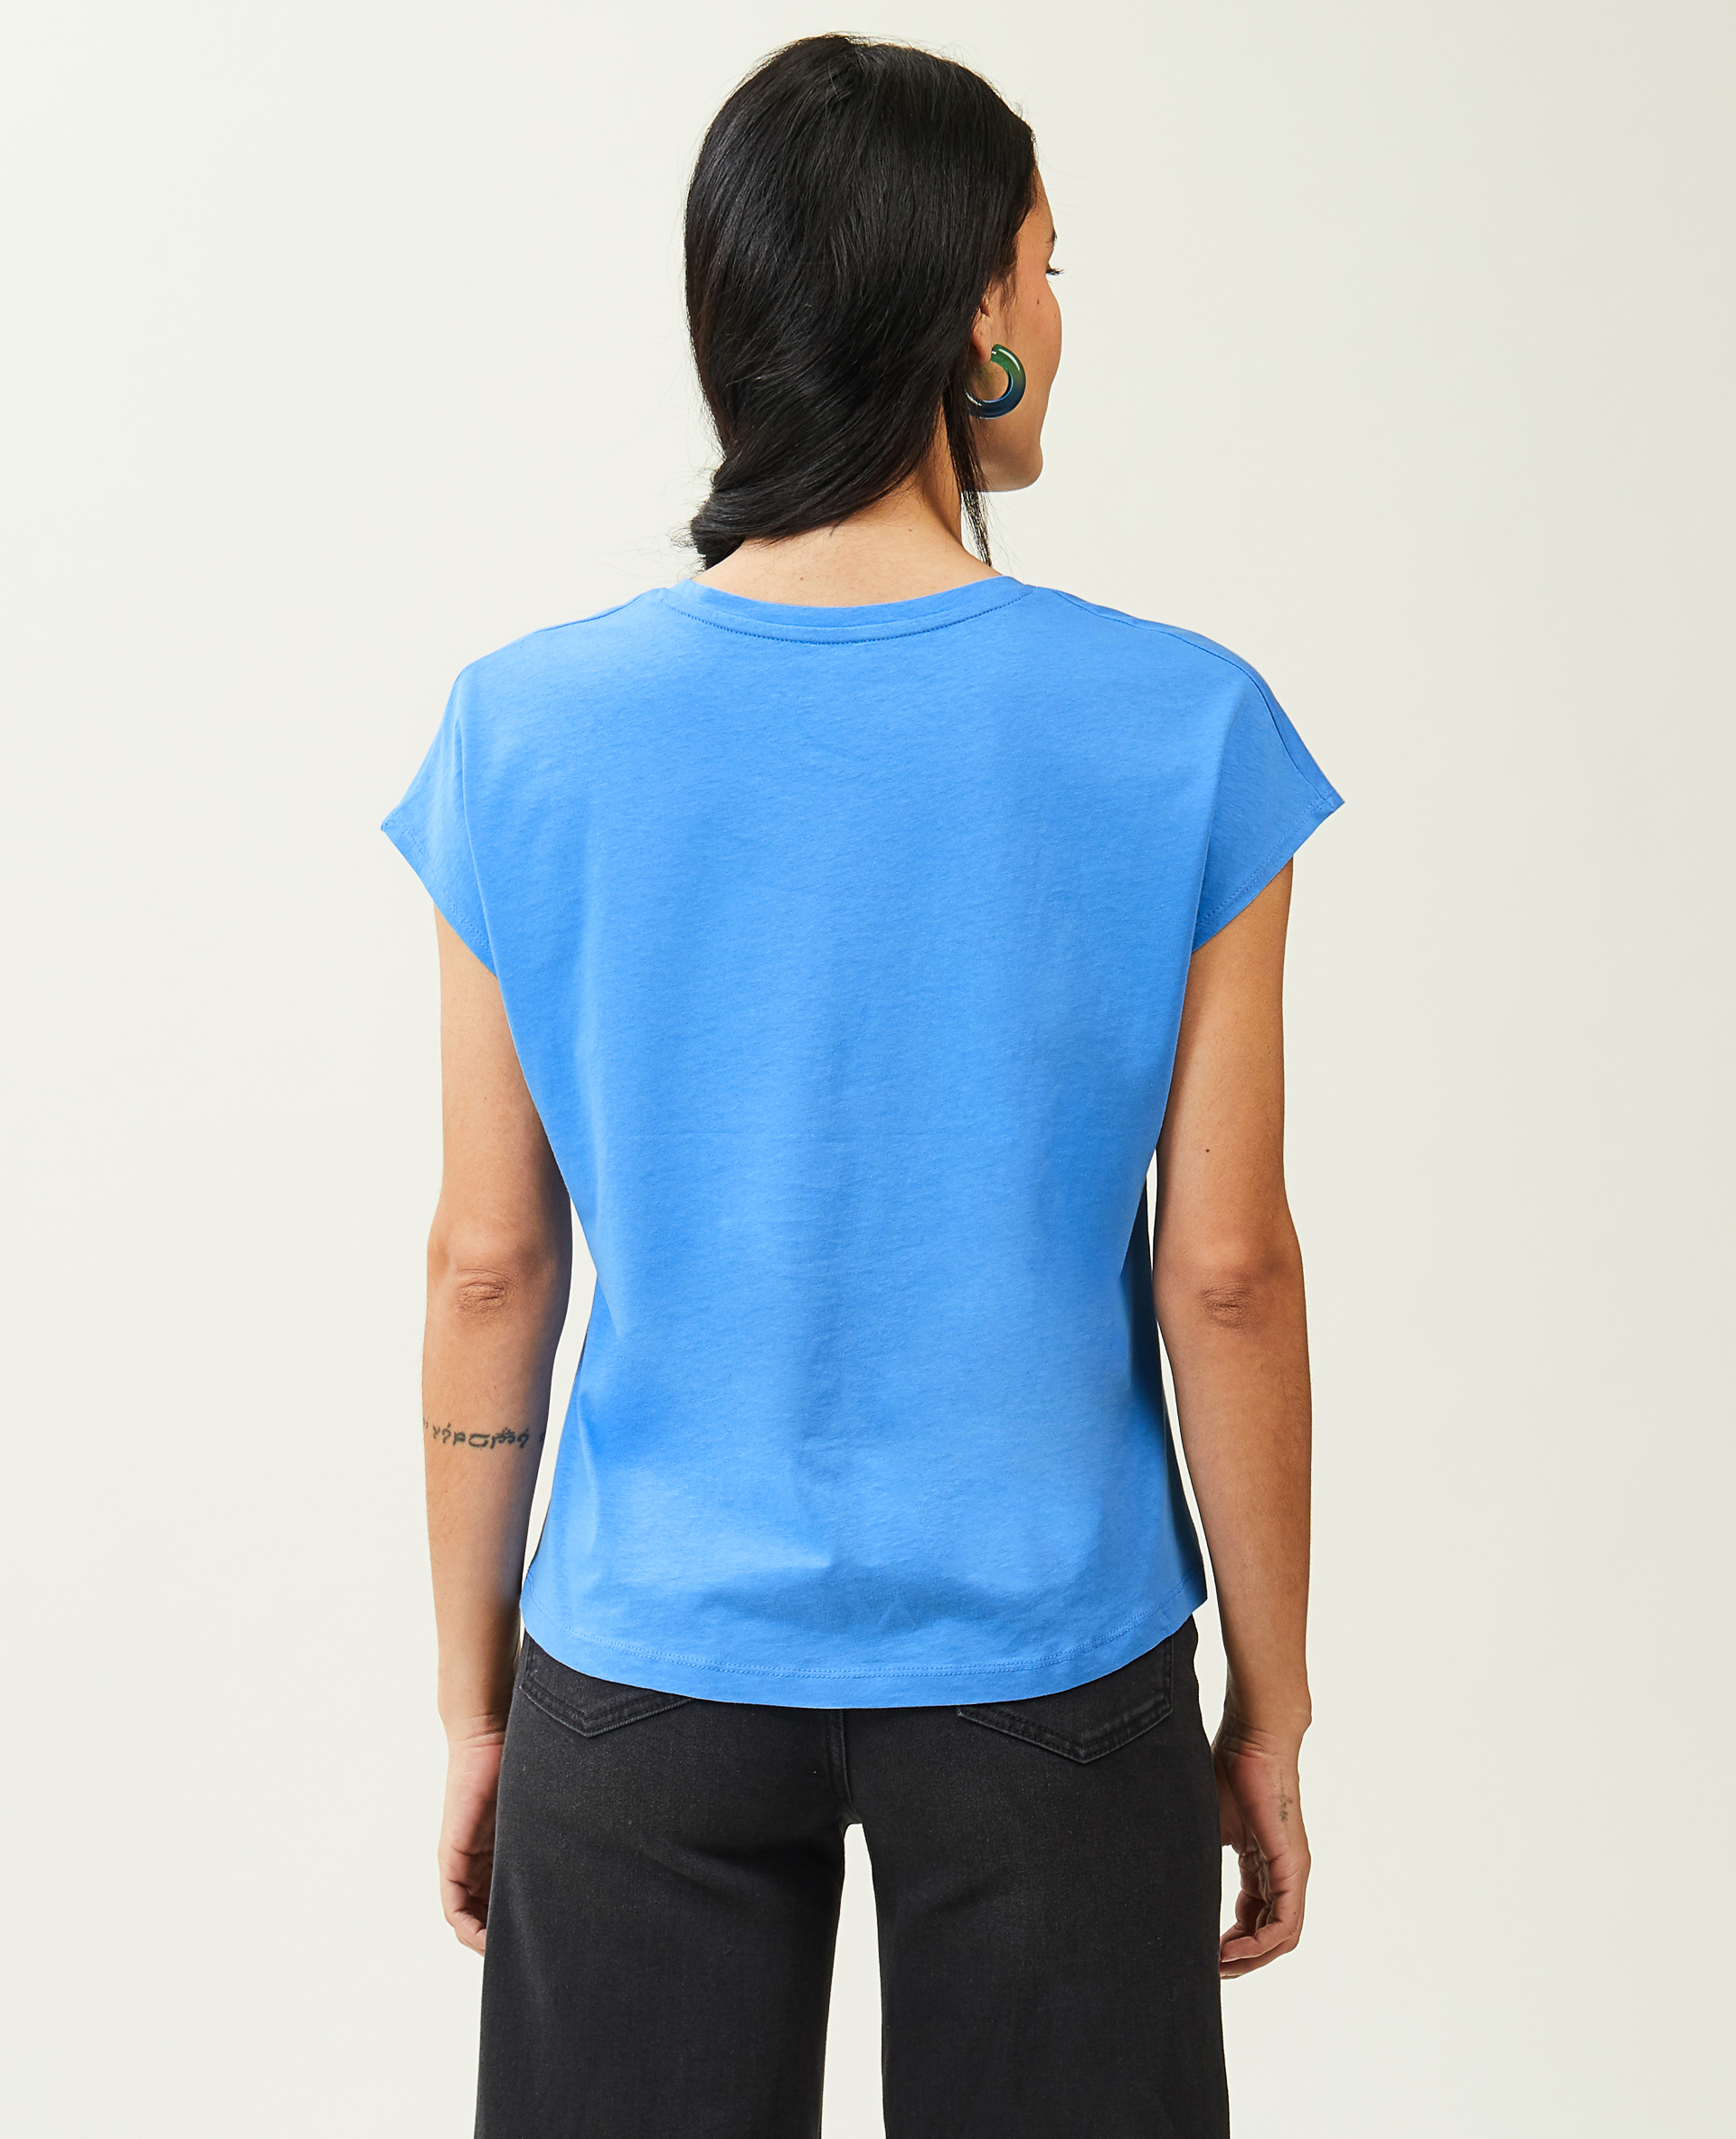 T-shirt col V manches courtes bleu - Pimkie